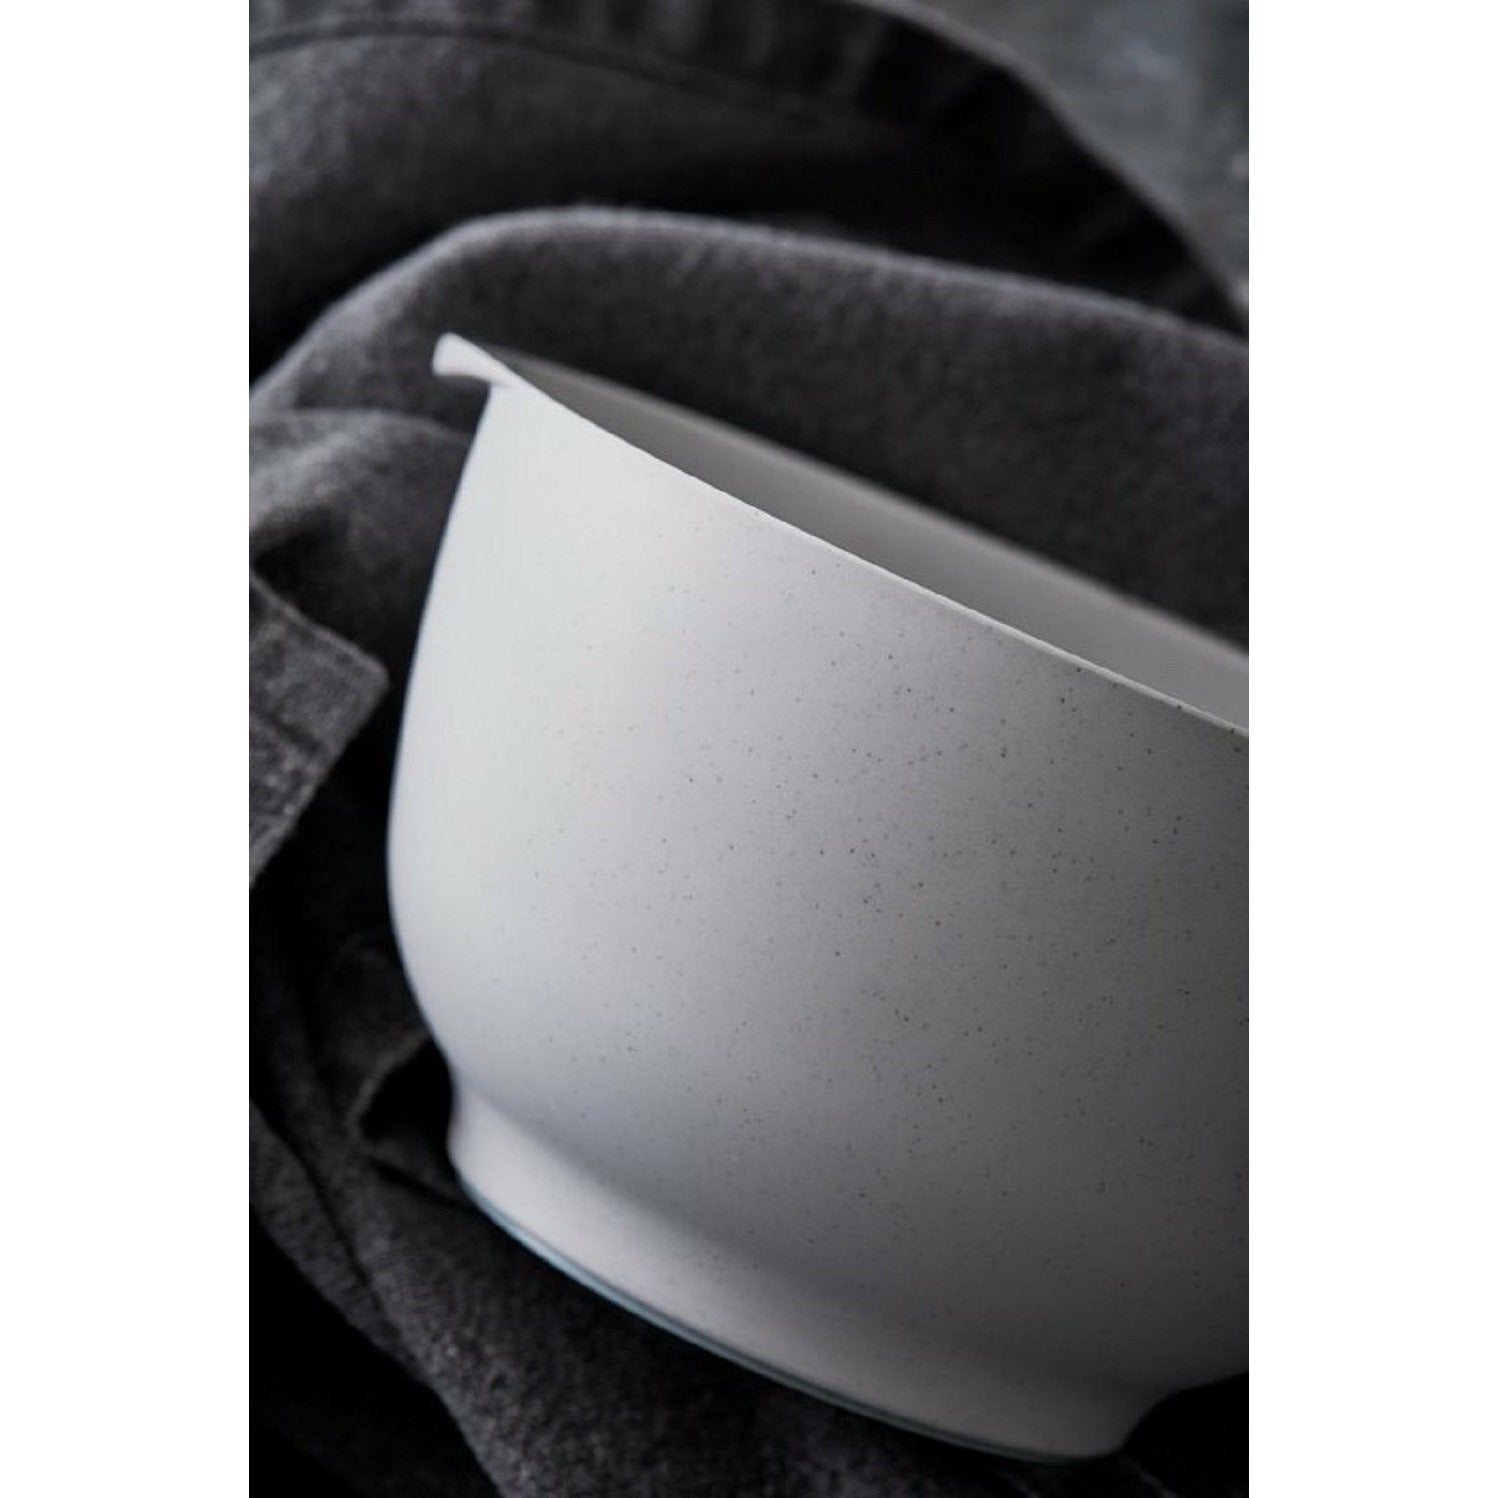 Rosti Margrethe Mixing Bowl Pebble White, 2,0 Liter